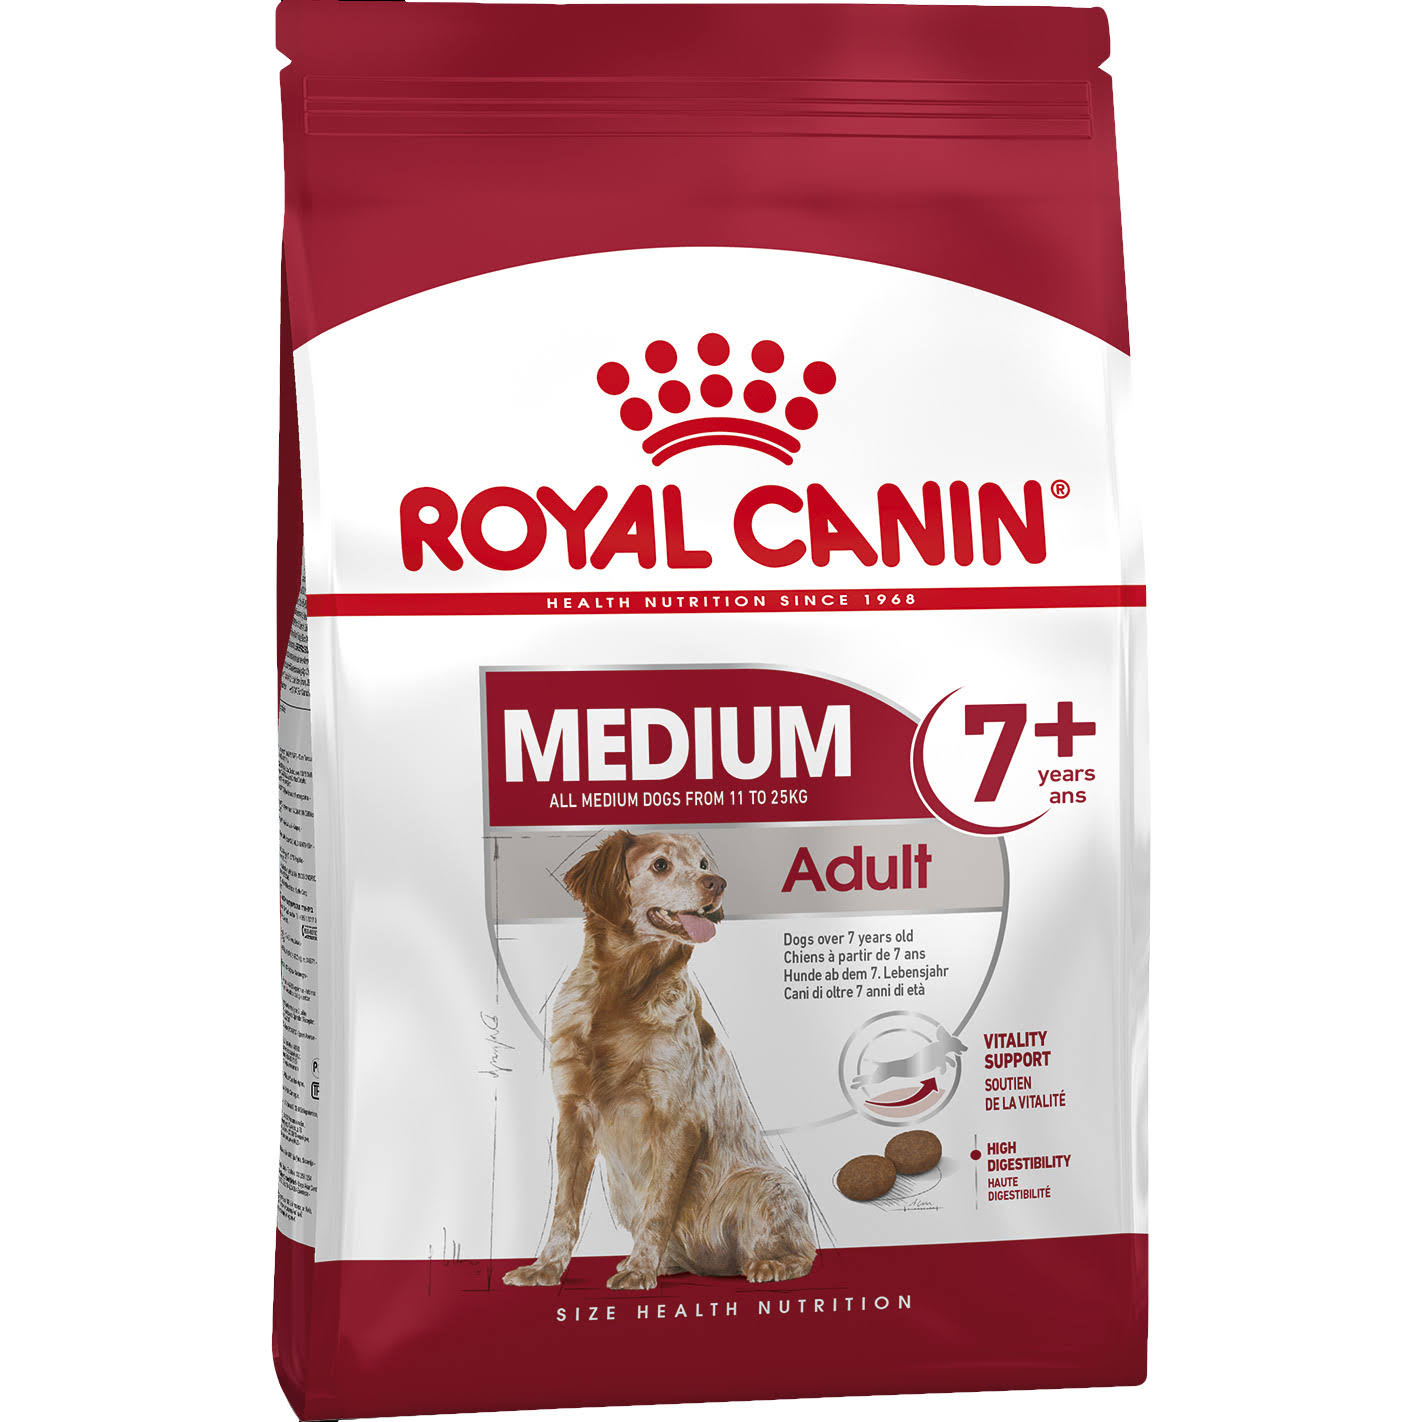 Royal Canin Adult 7+ Dog Food - Medium Dogs